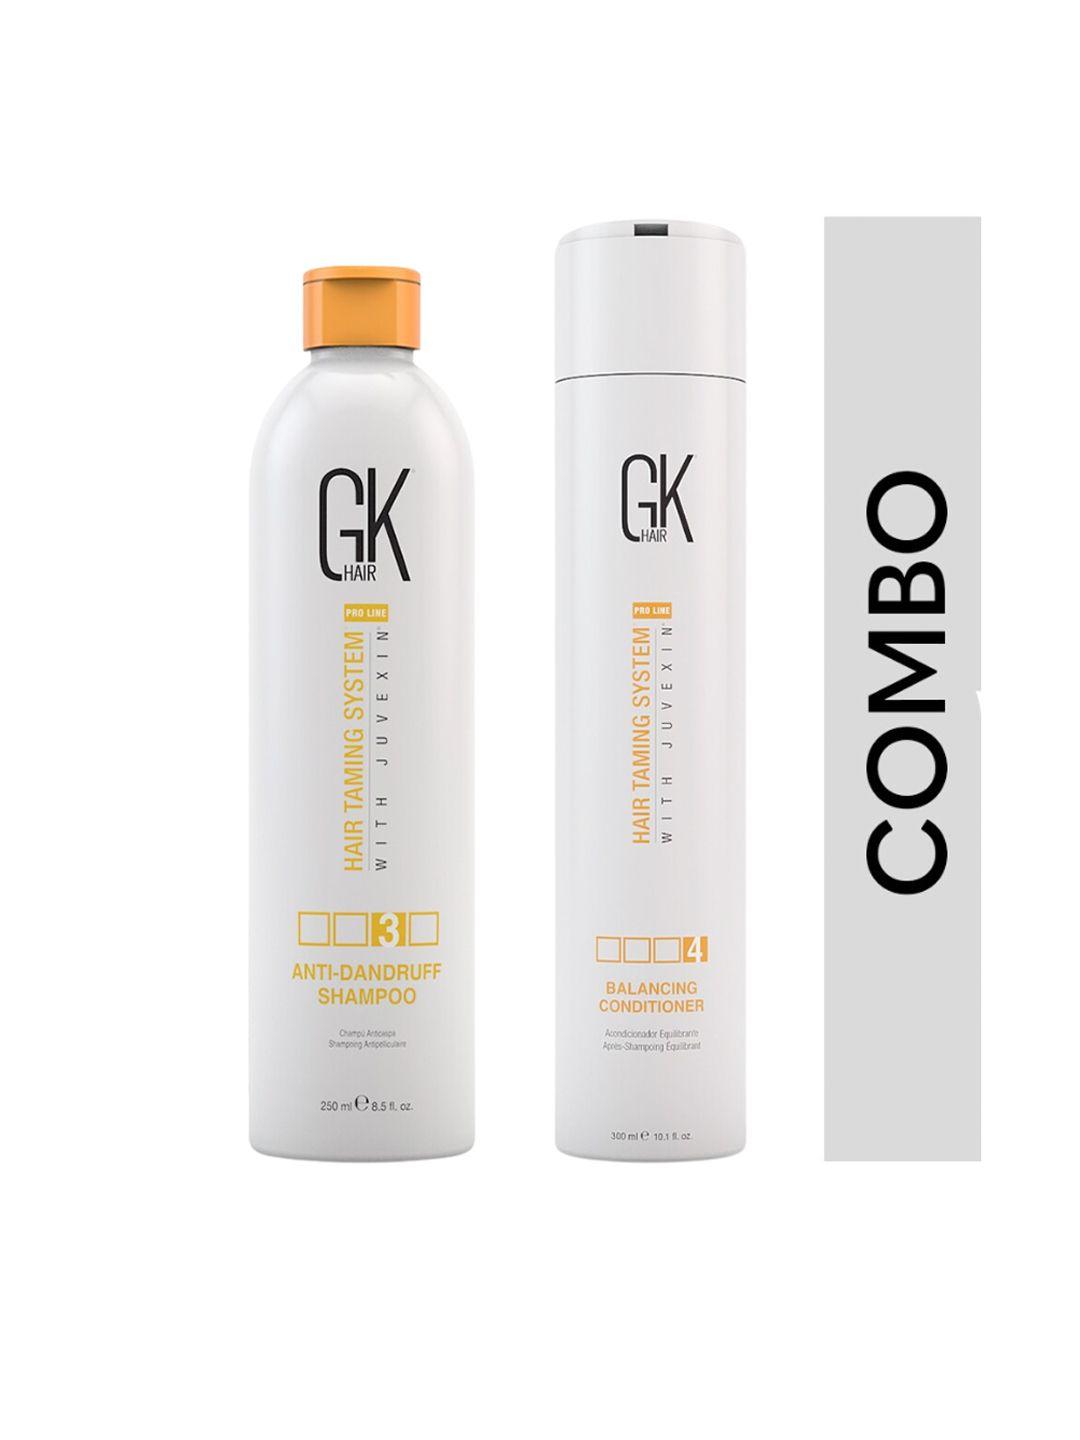 gk hair set of anti-dandruff shampoo - 250 ml & balancing conditioner - 300 ml